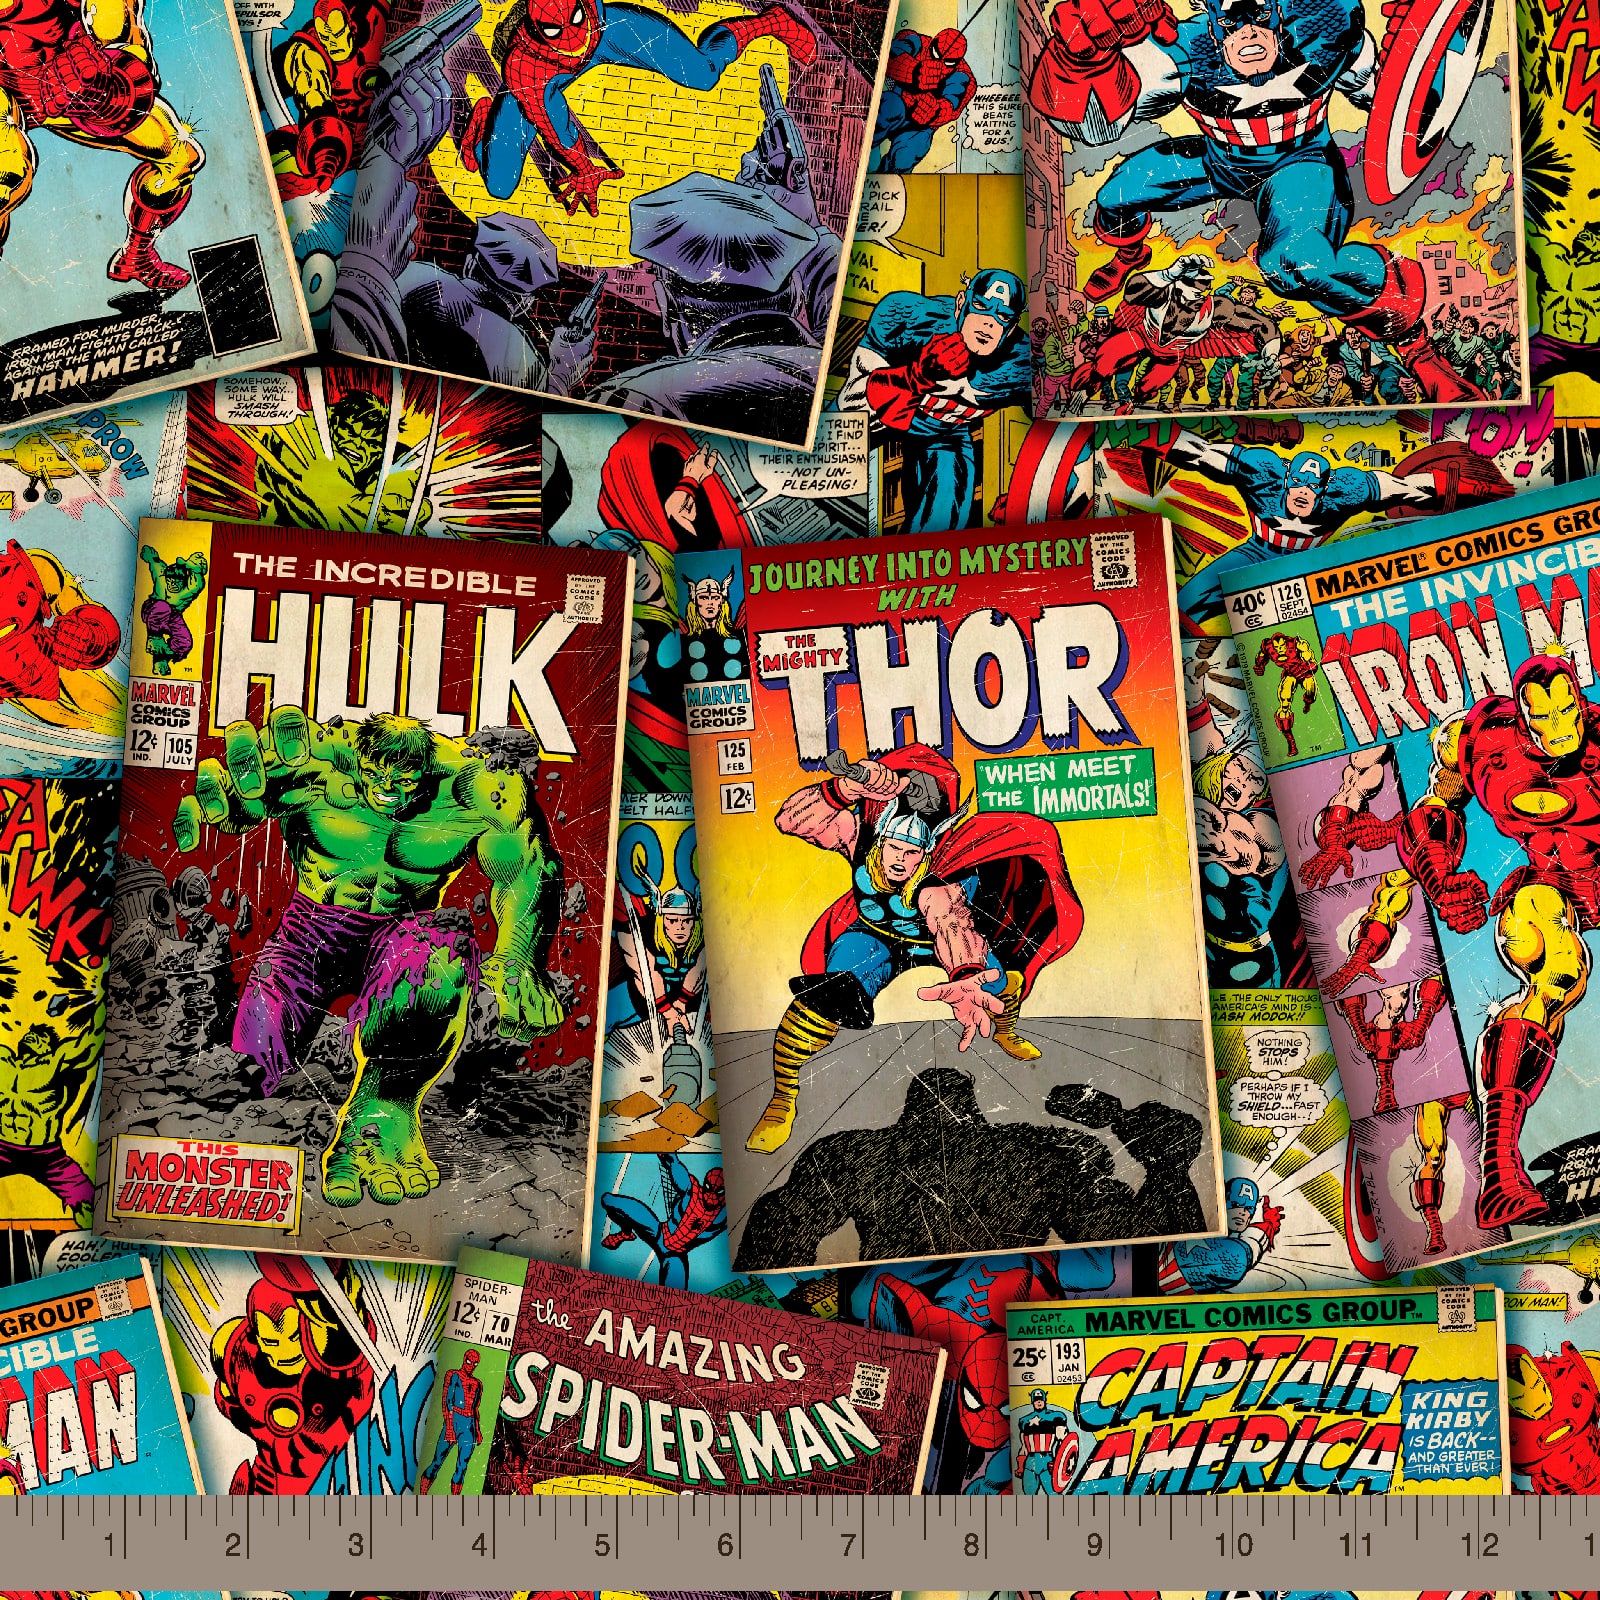 Marvel Retro Comics Covers Cotton Fabric